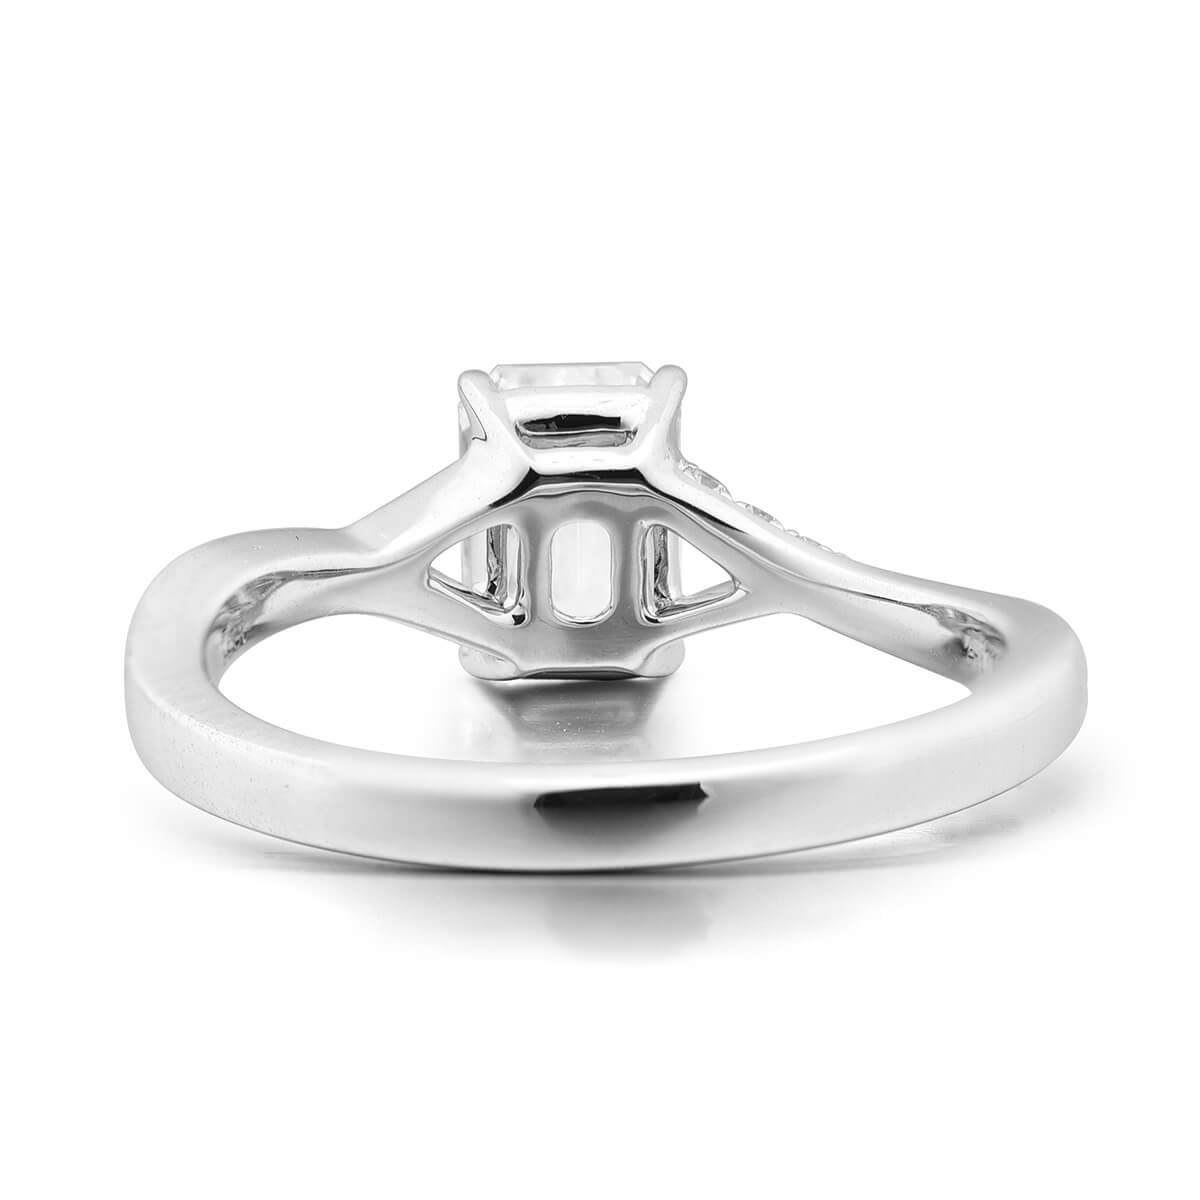  White Diamond Ring, 0.16 Carat, Emerald shape, GIA Certified, 7271165439